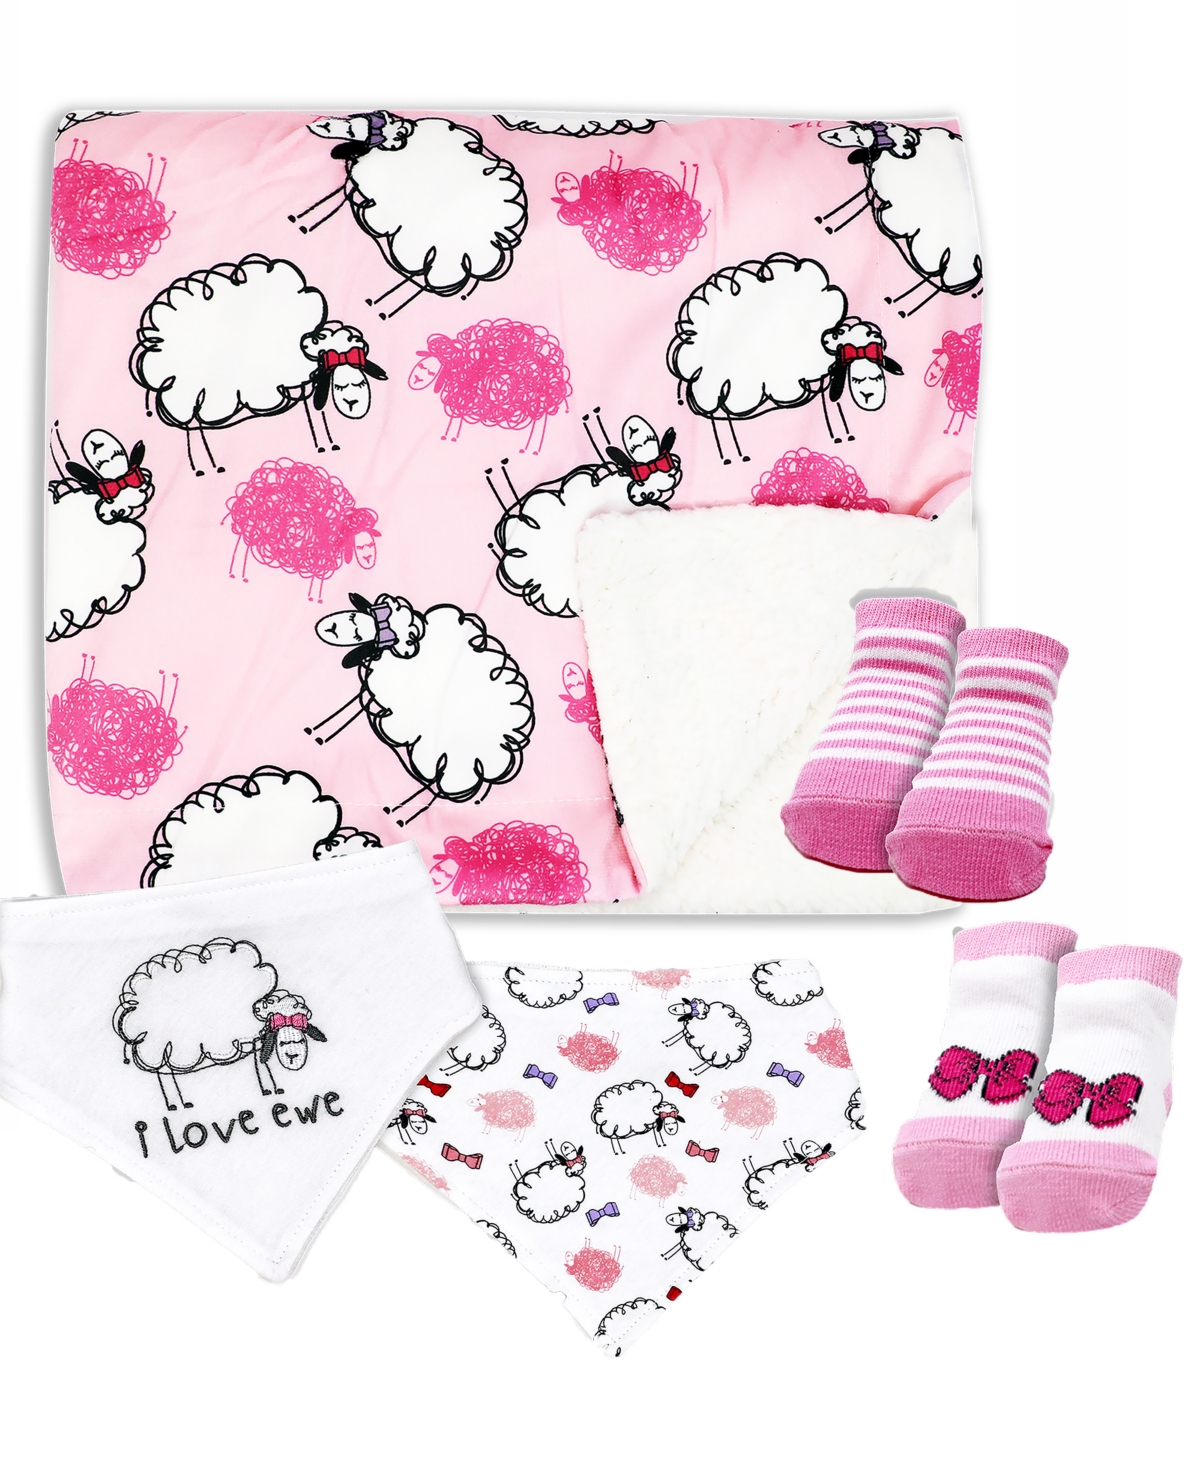 Baby Mode Baby Girls Minky Blanket, Bibs And Socks, 5 Piece Set In Fuchsia Sheep